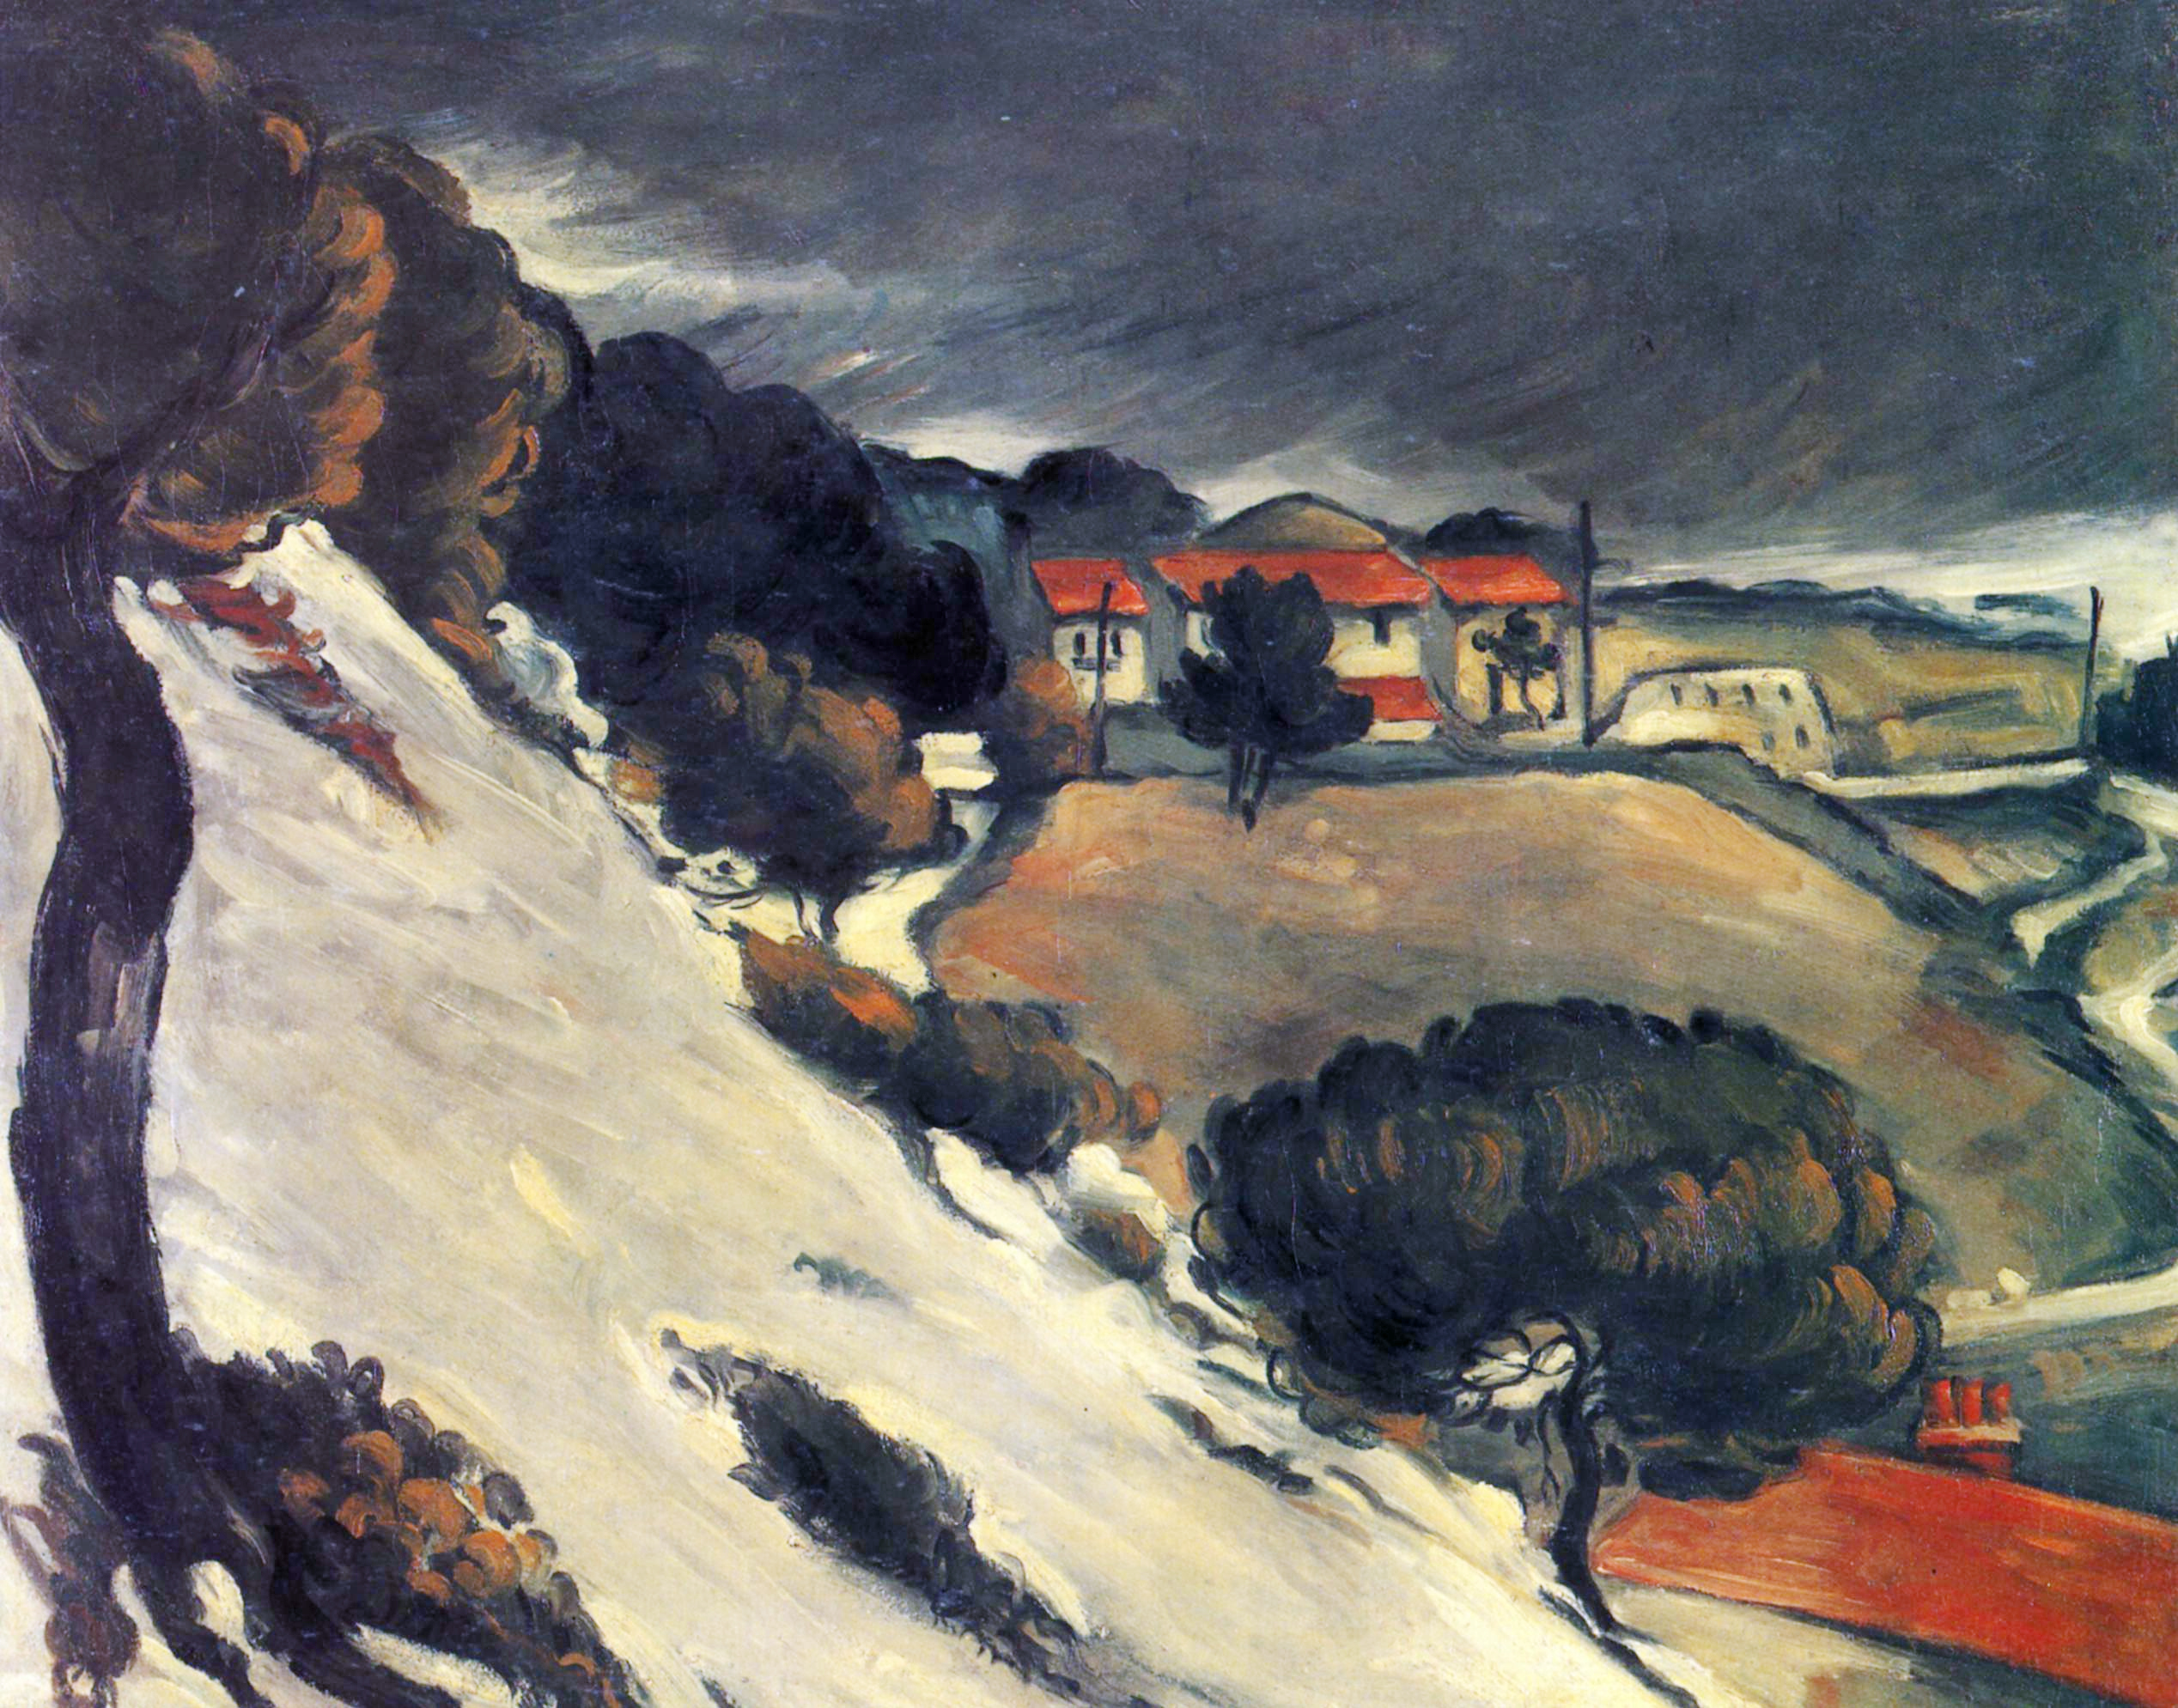 Paul Cézanne, Melting Snow